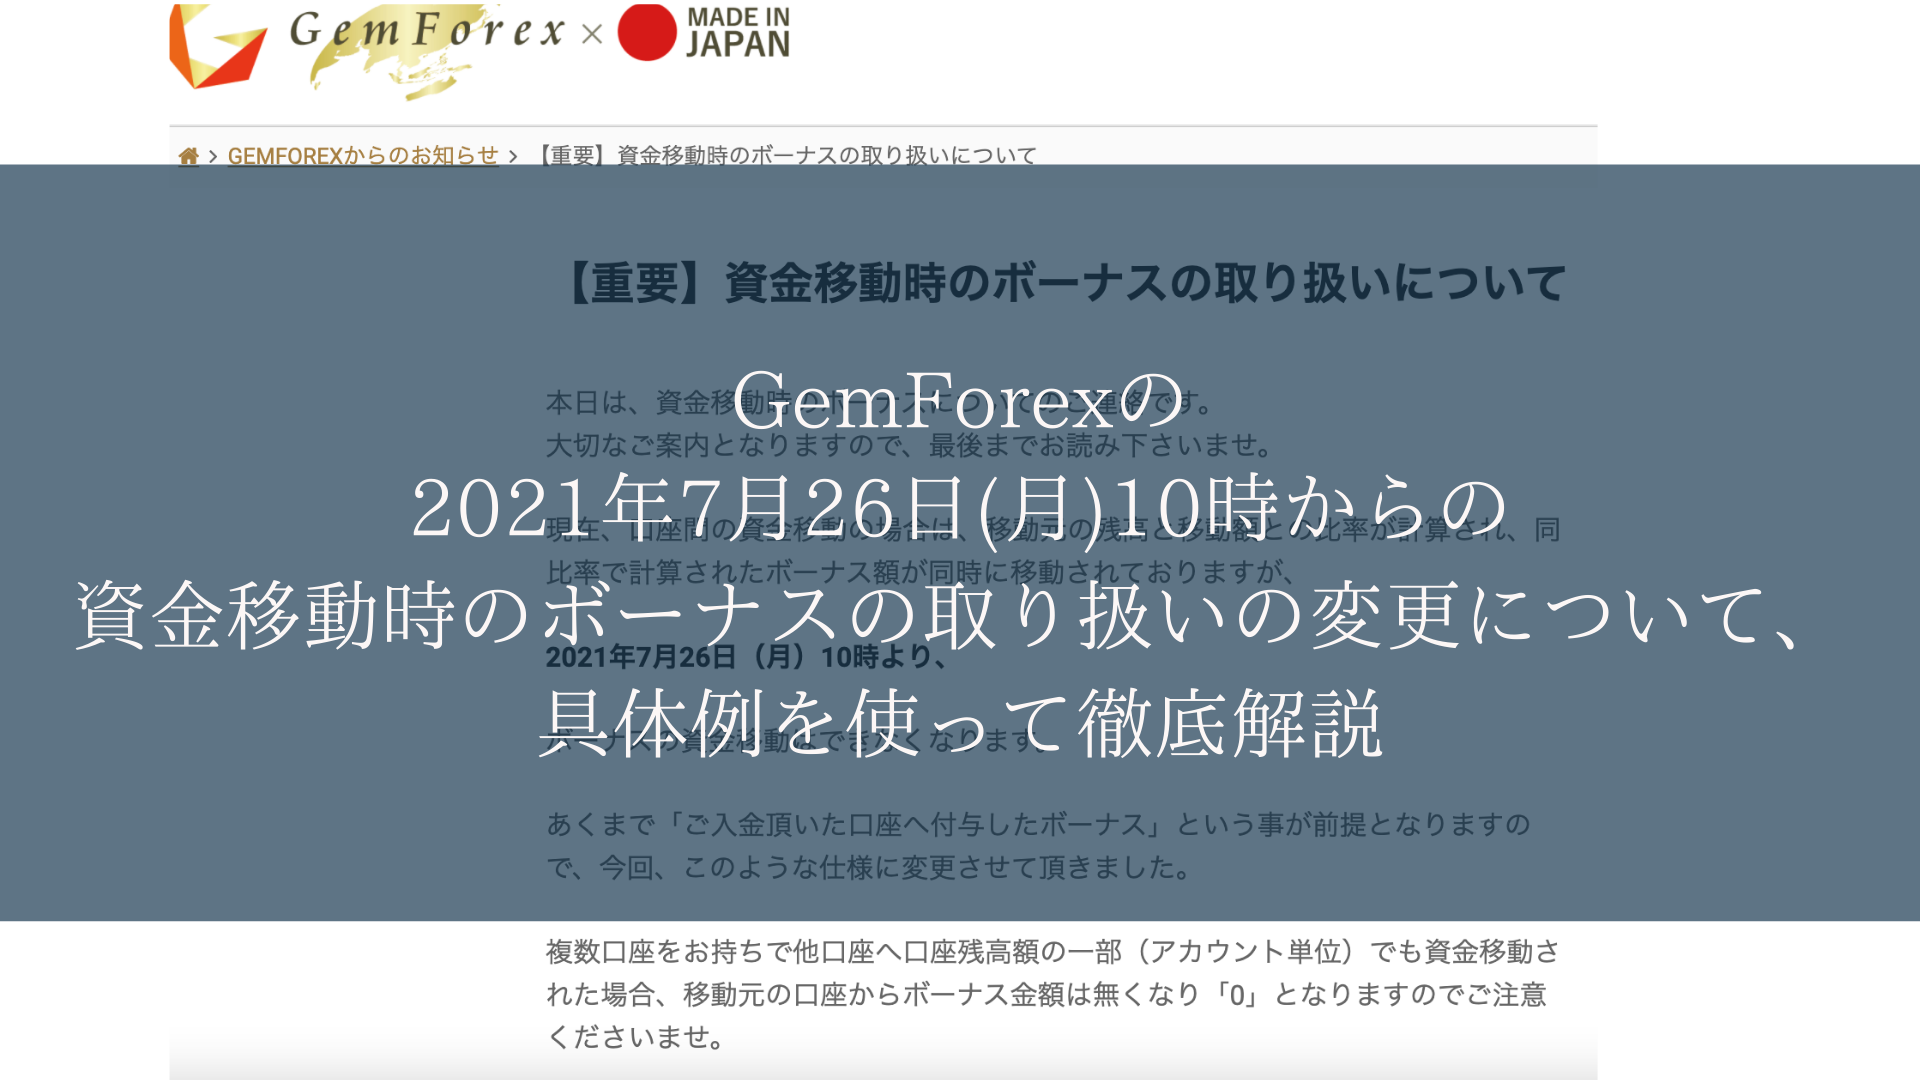 GemForexの2021年7月26日(月)10時からの資金移動時のボーナスの取り扱いの変更について、具体例を使って徹底解説